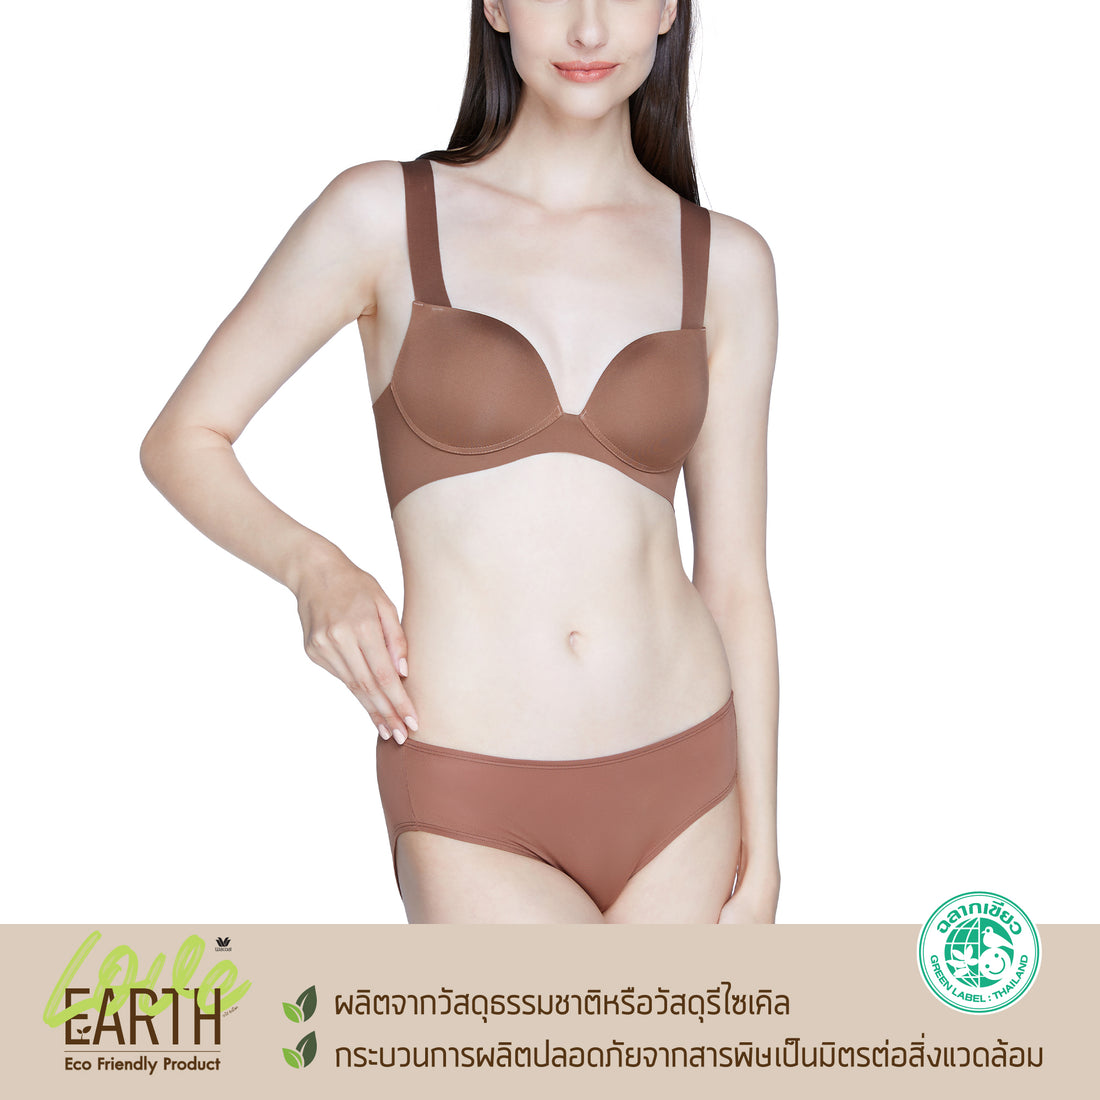 Wacoal Push Up Bra, underwire bra with 8 mm thin padding (bra and pant –  Thai Wacoal Public Company Limited